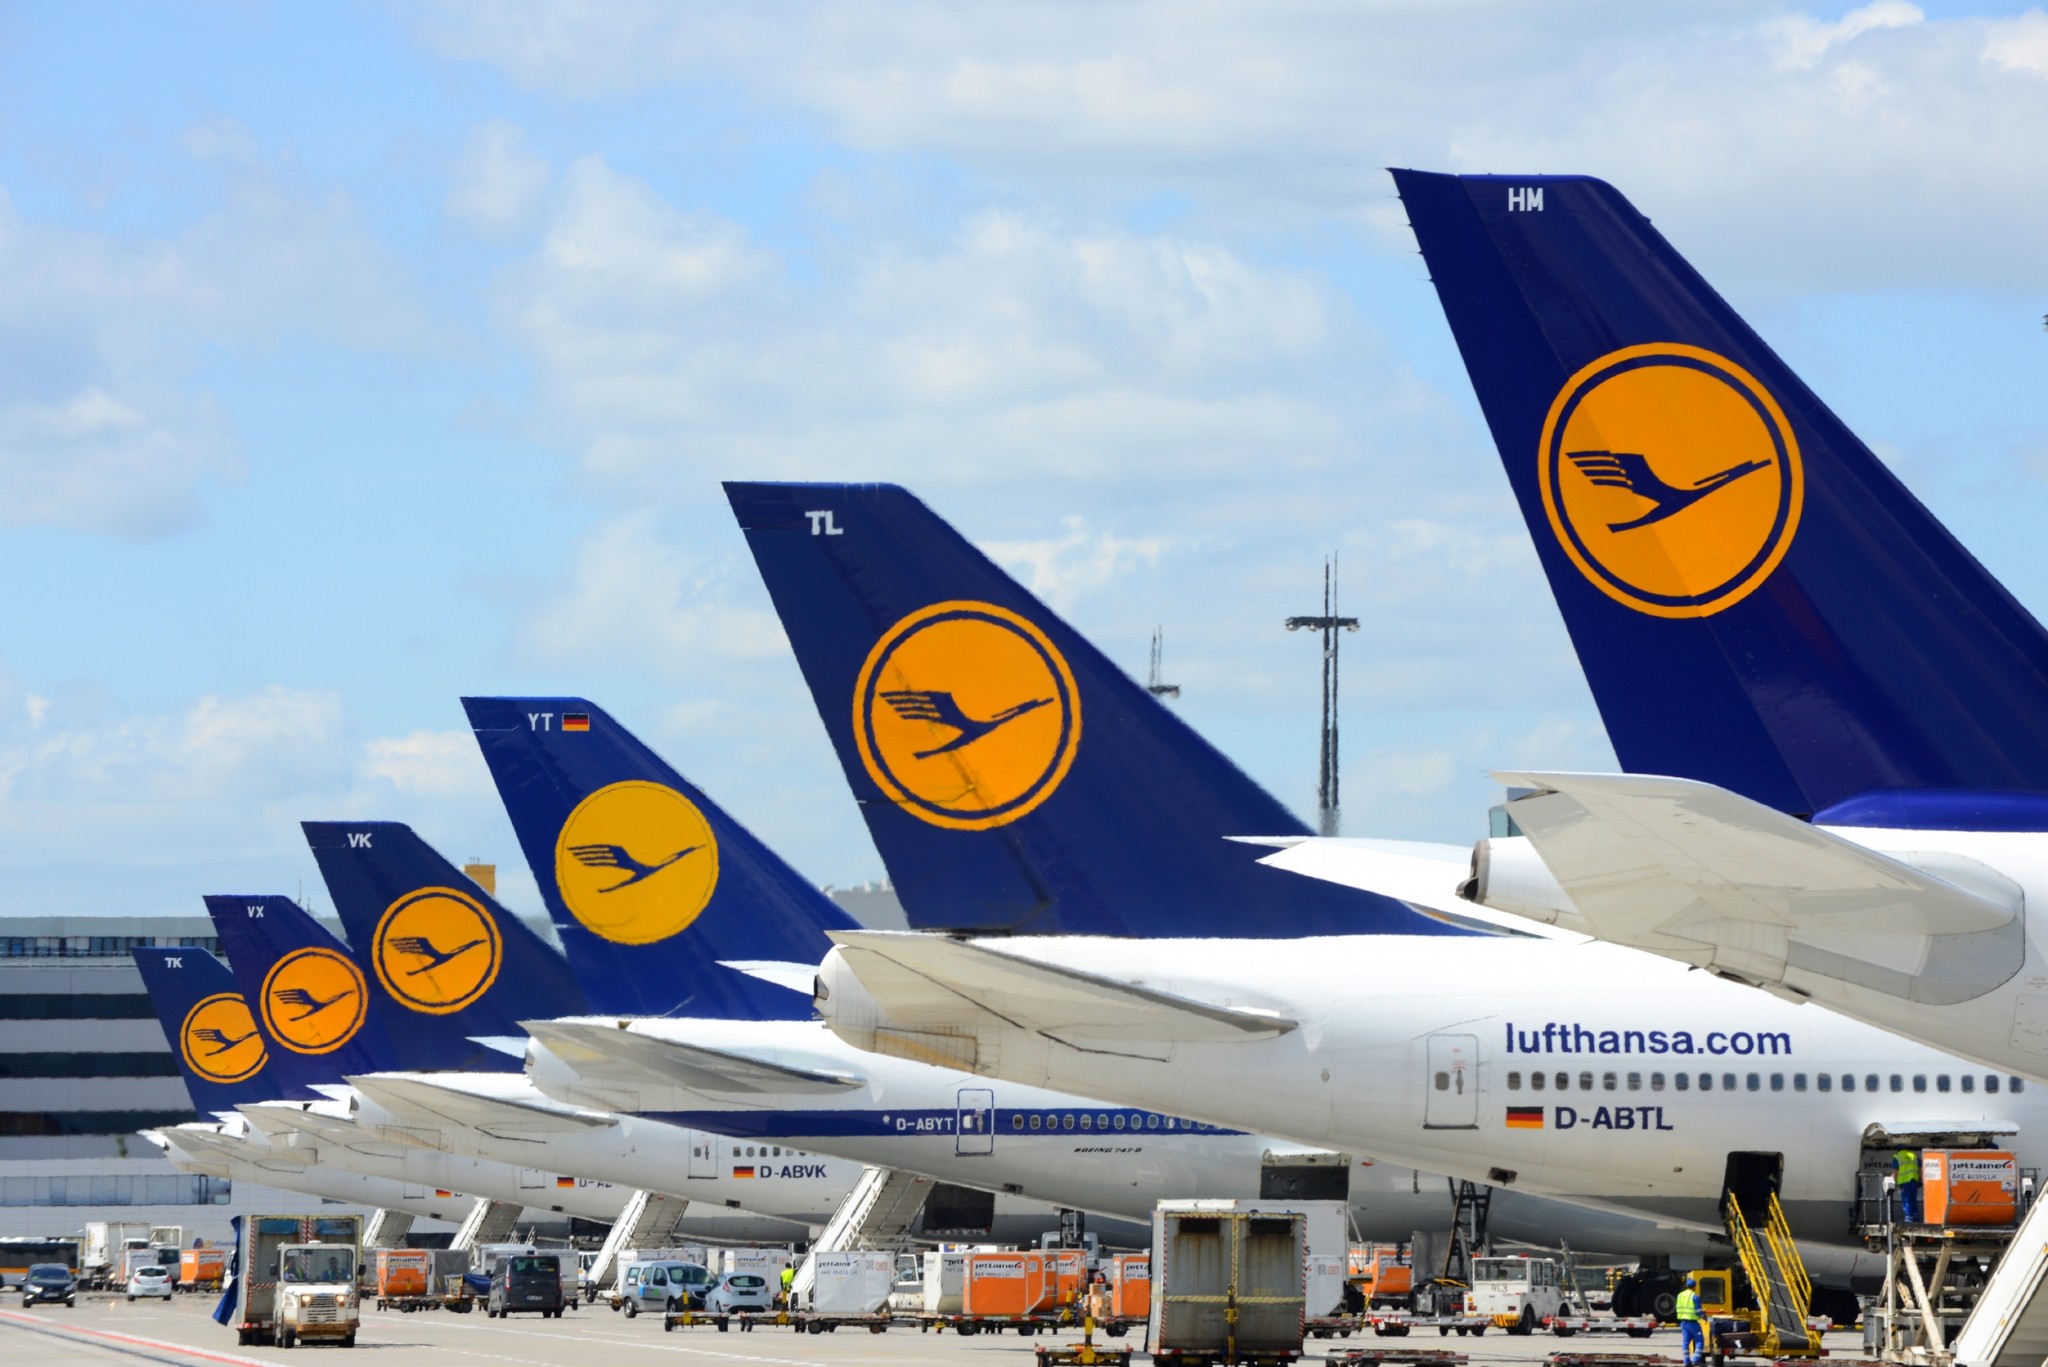 Lufthansa pilots’ strike cancels flights